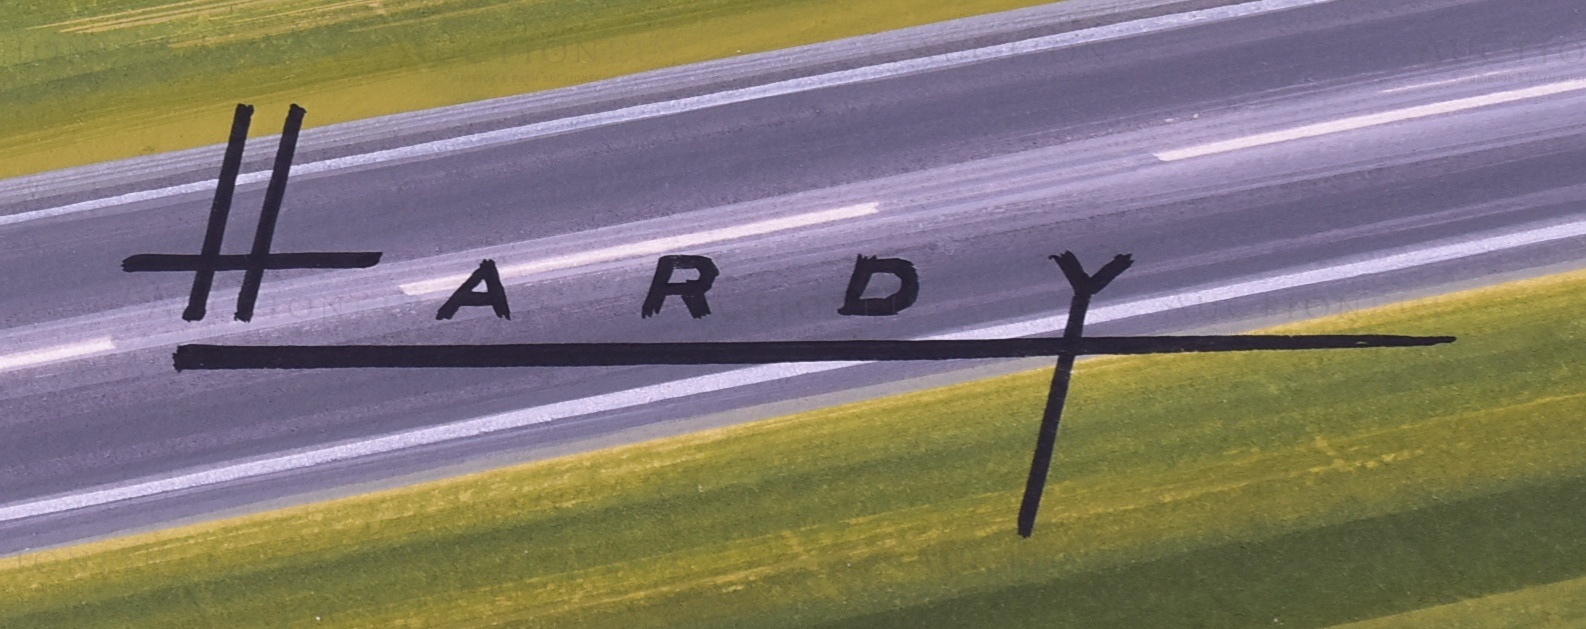 WILFRED HARDY - CASTELLA CIGARS - ORIGINAL ARTWORK - Image 4 of 6